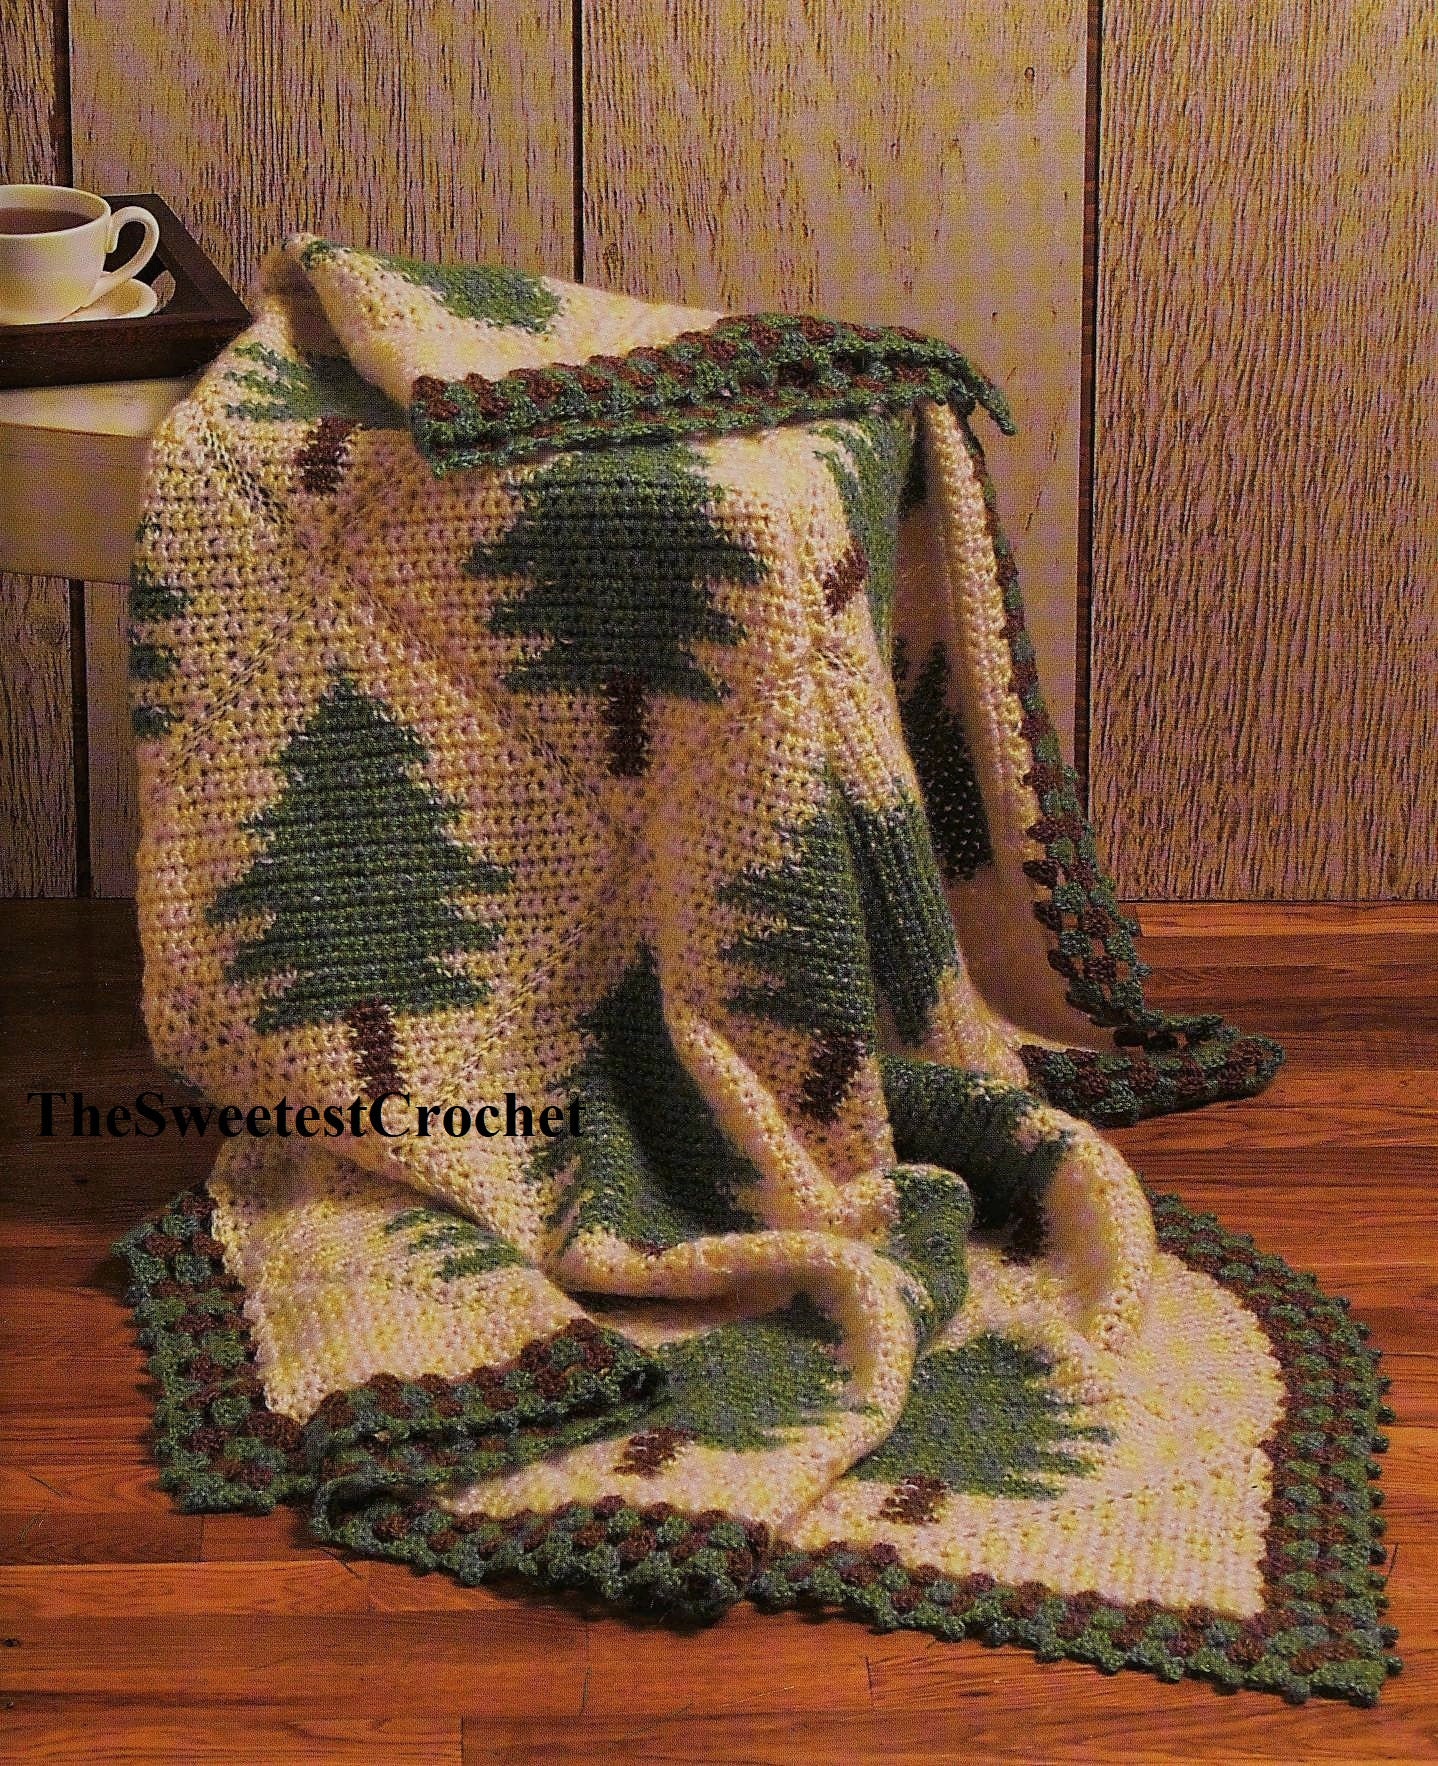 Handmade Pine Crochet Blocking Board 